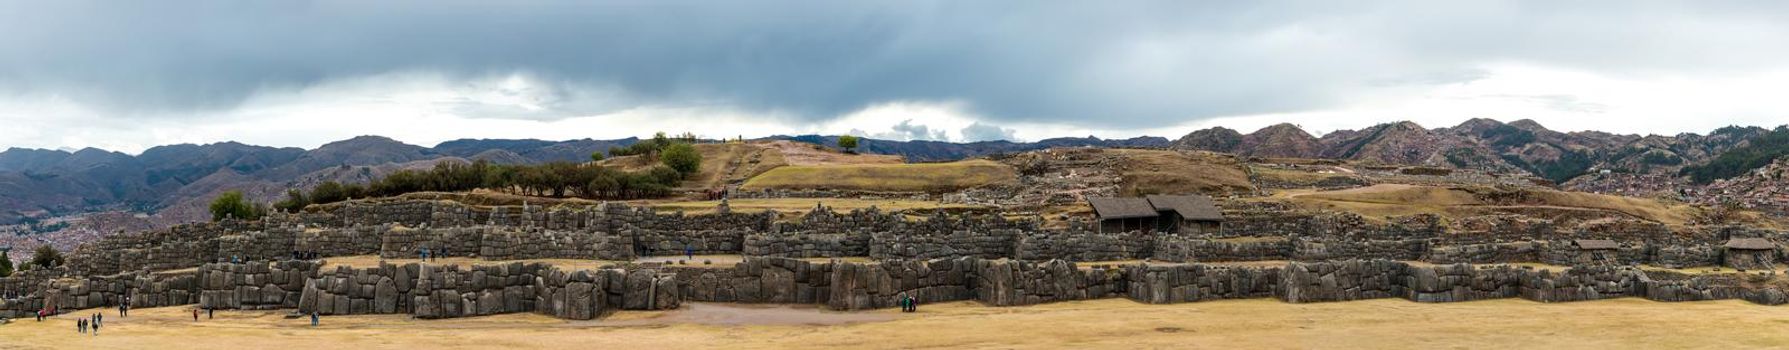 Ruined castle Saksaywaman in Peru